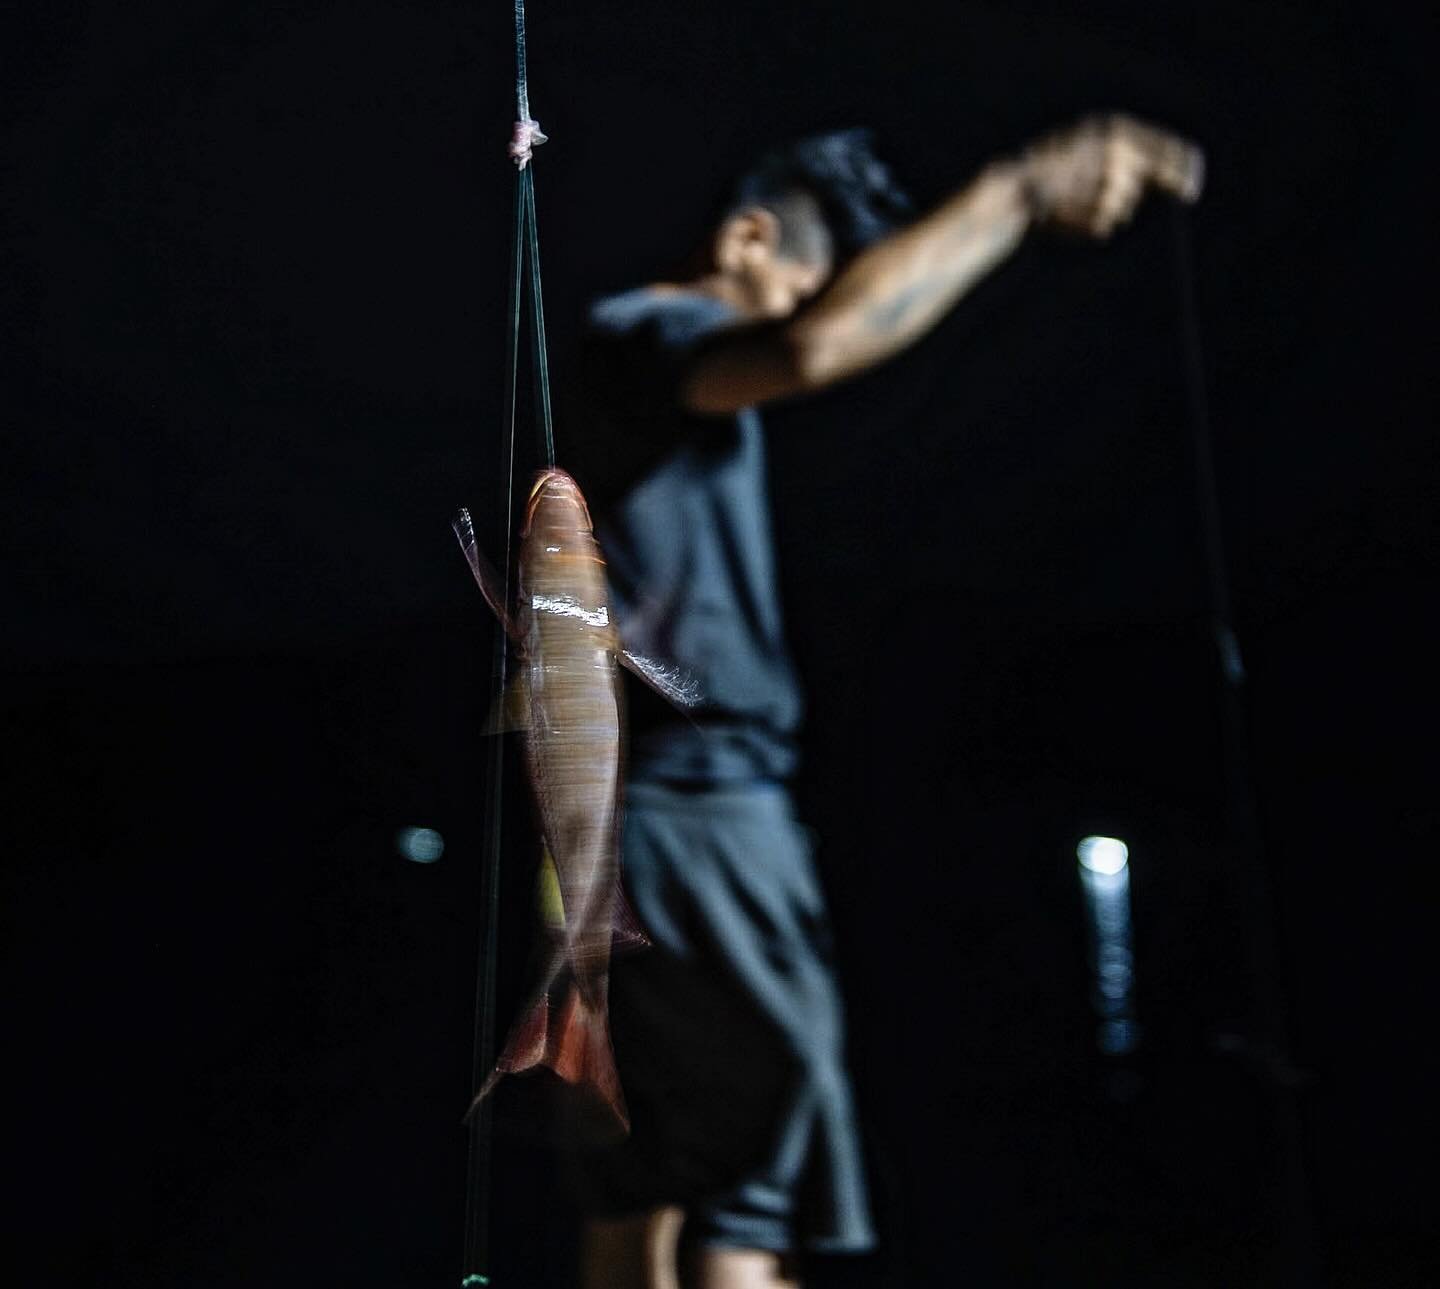 La pesca del d&iacute;a.

#colombia #travel #fish #ontheroadagain #people #reality #natgeotravel #magicalrealism